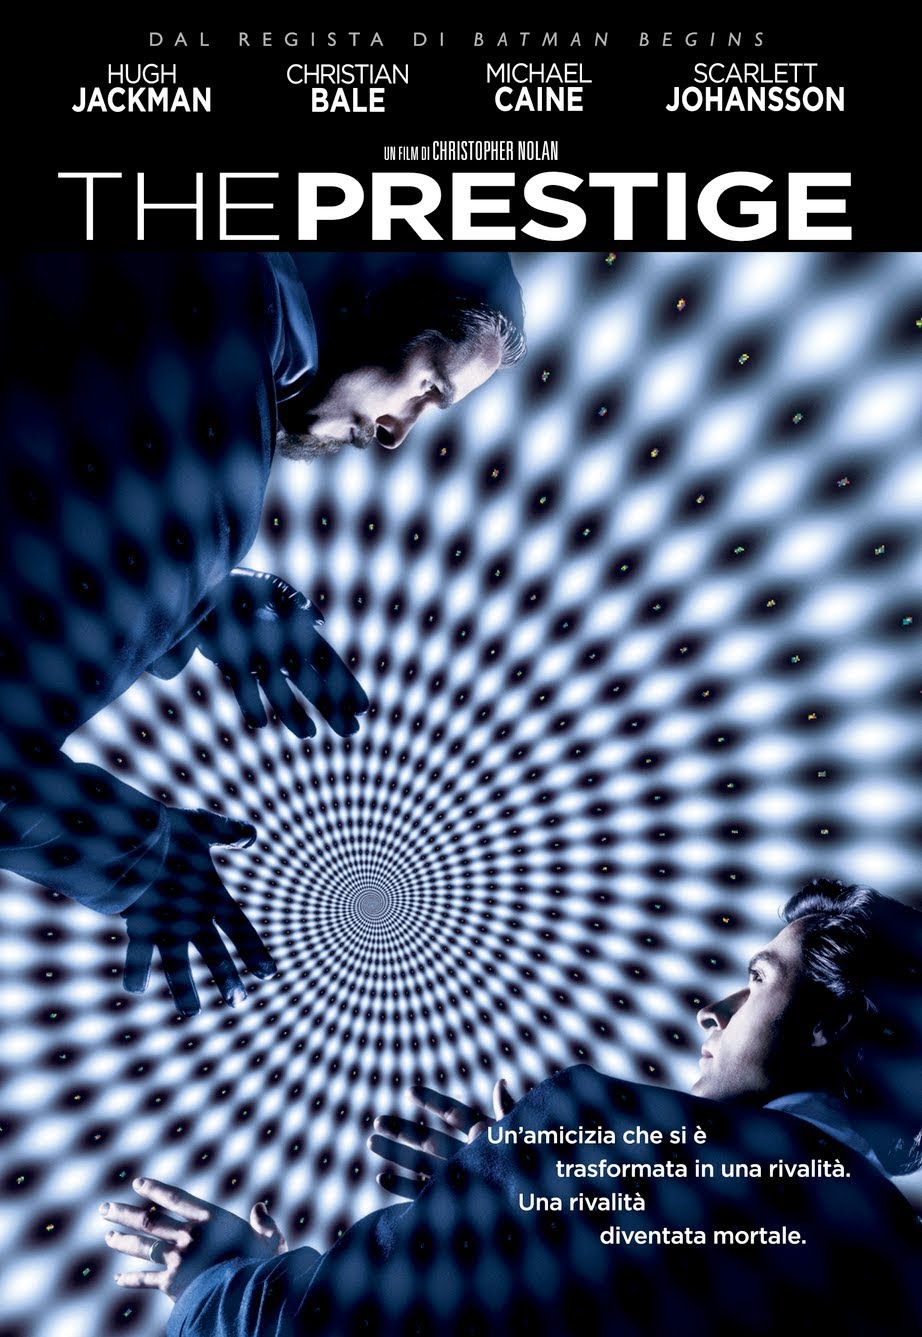 The prestige [HD] (2006)